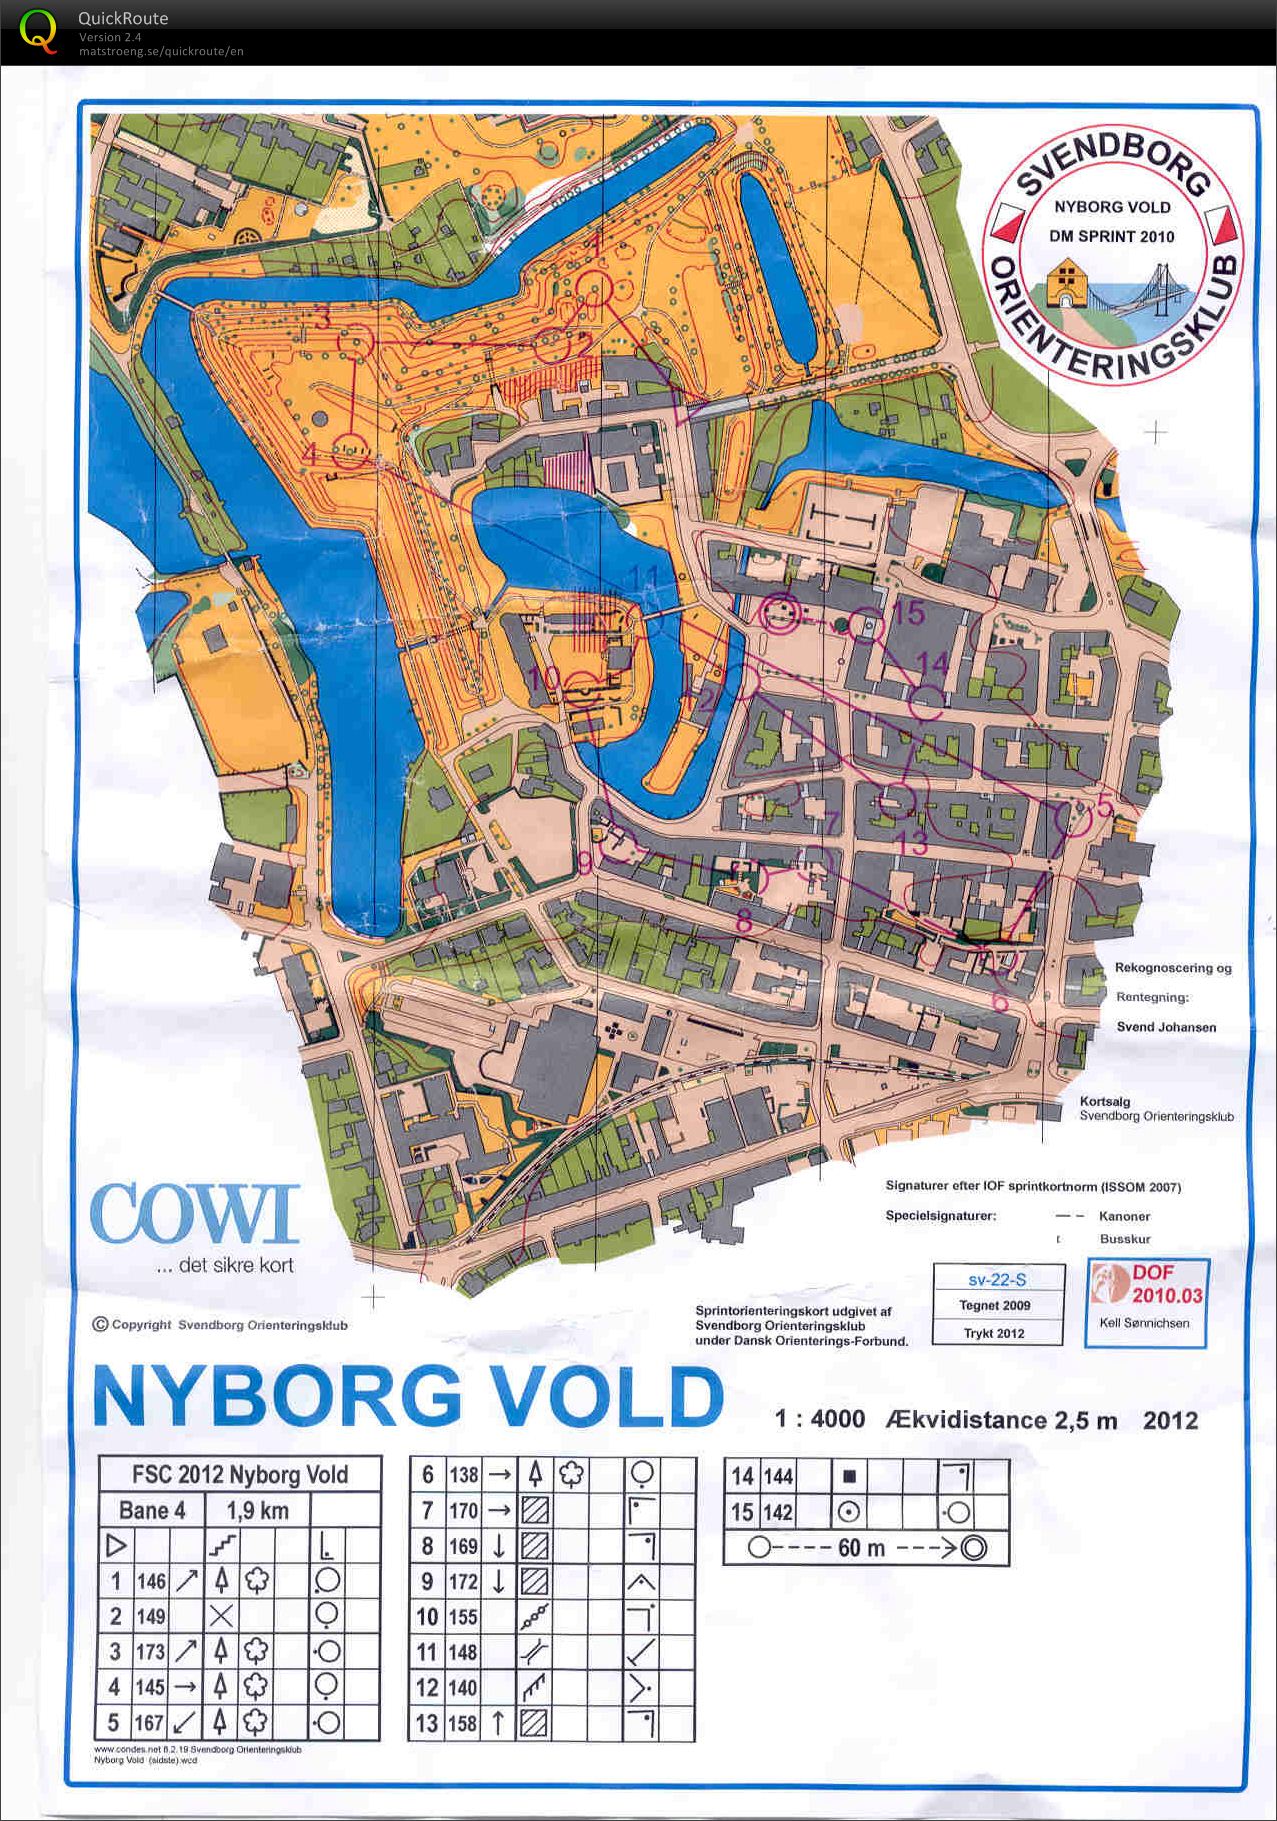 Nyborg Vold, Bane 4, D55, Pia Gade, 280512 (28/05/2012)